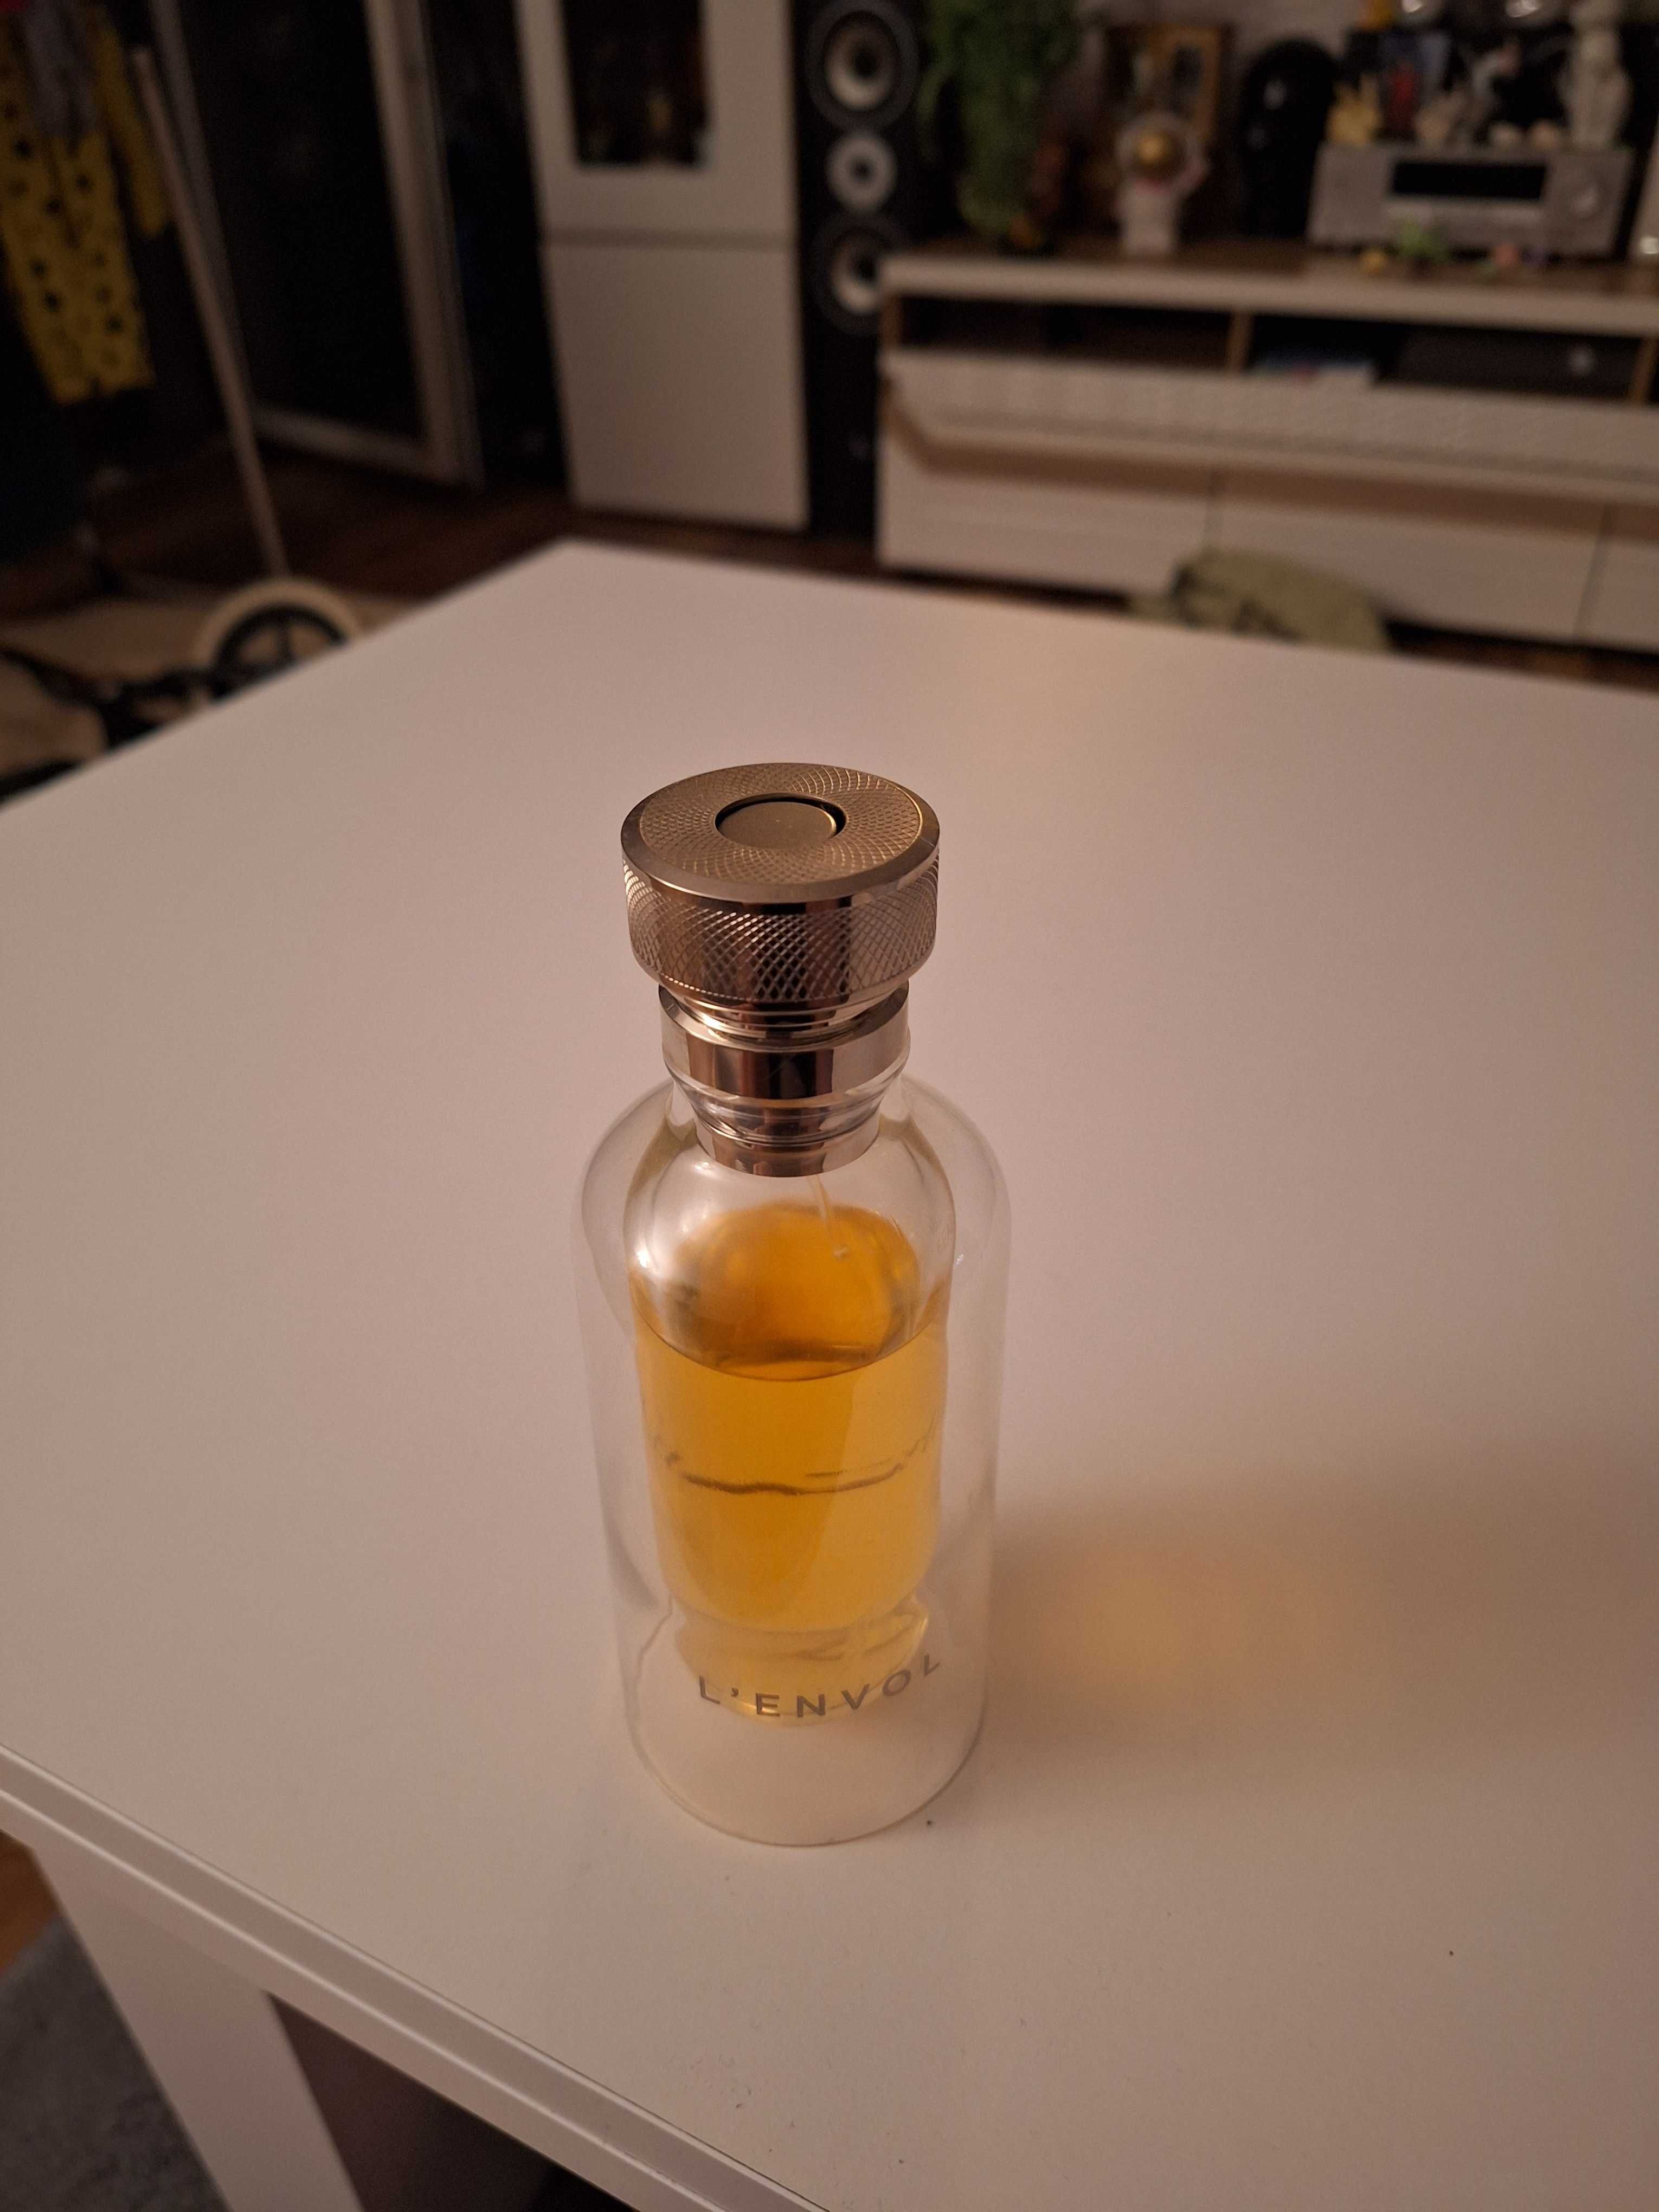 Perfuma męska CARTIER L'ENVOL oryginalna z perfumerii Douglas 100 ml